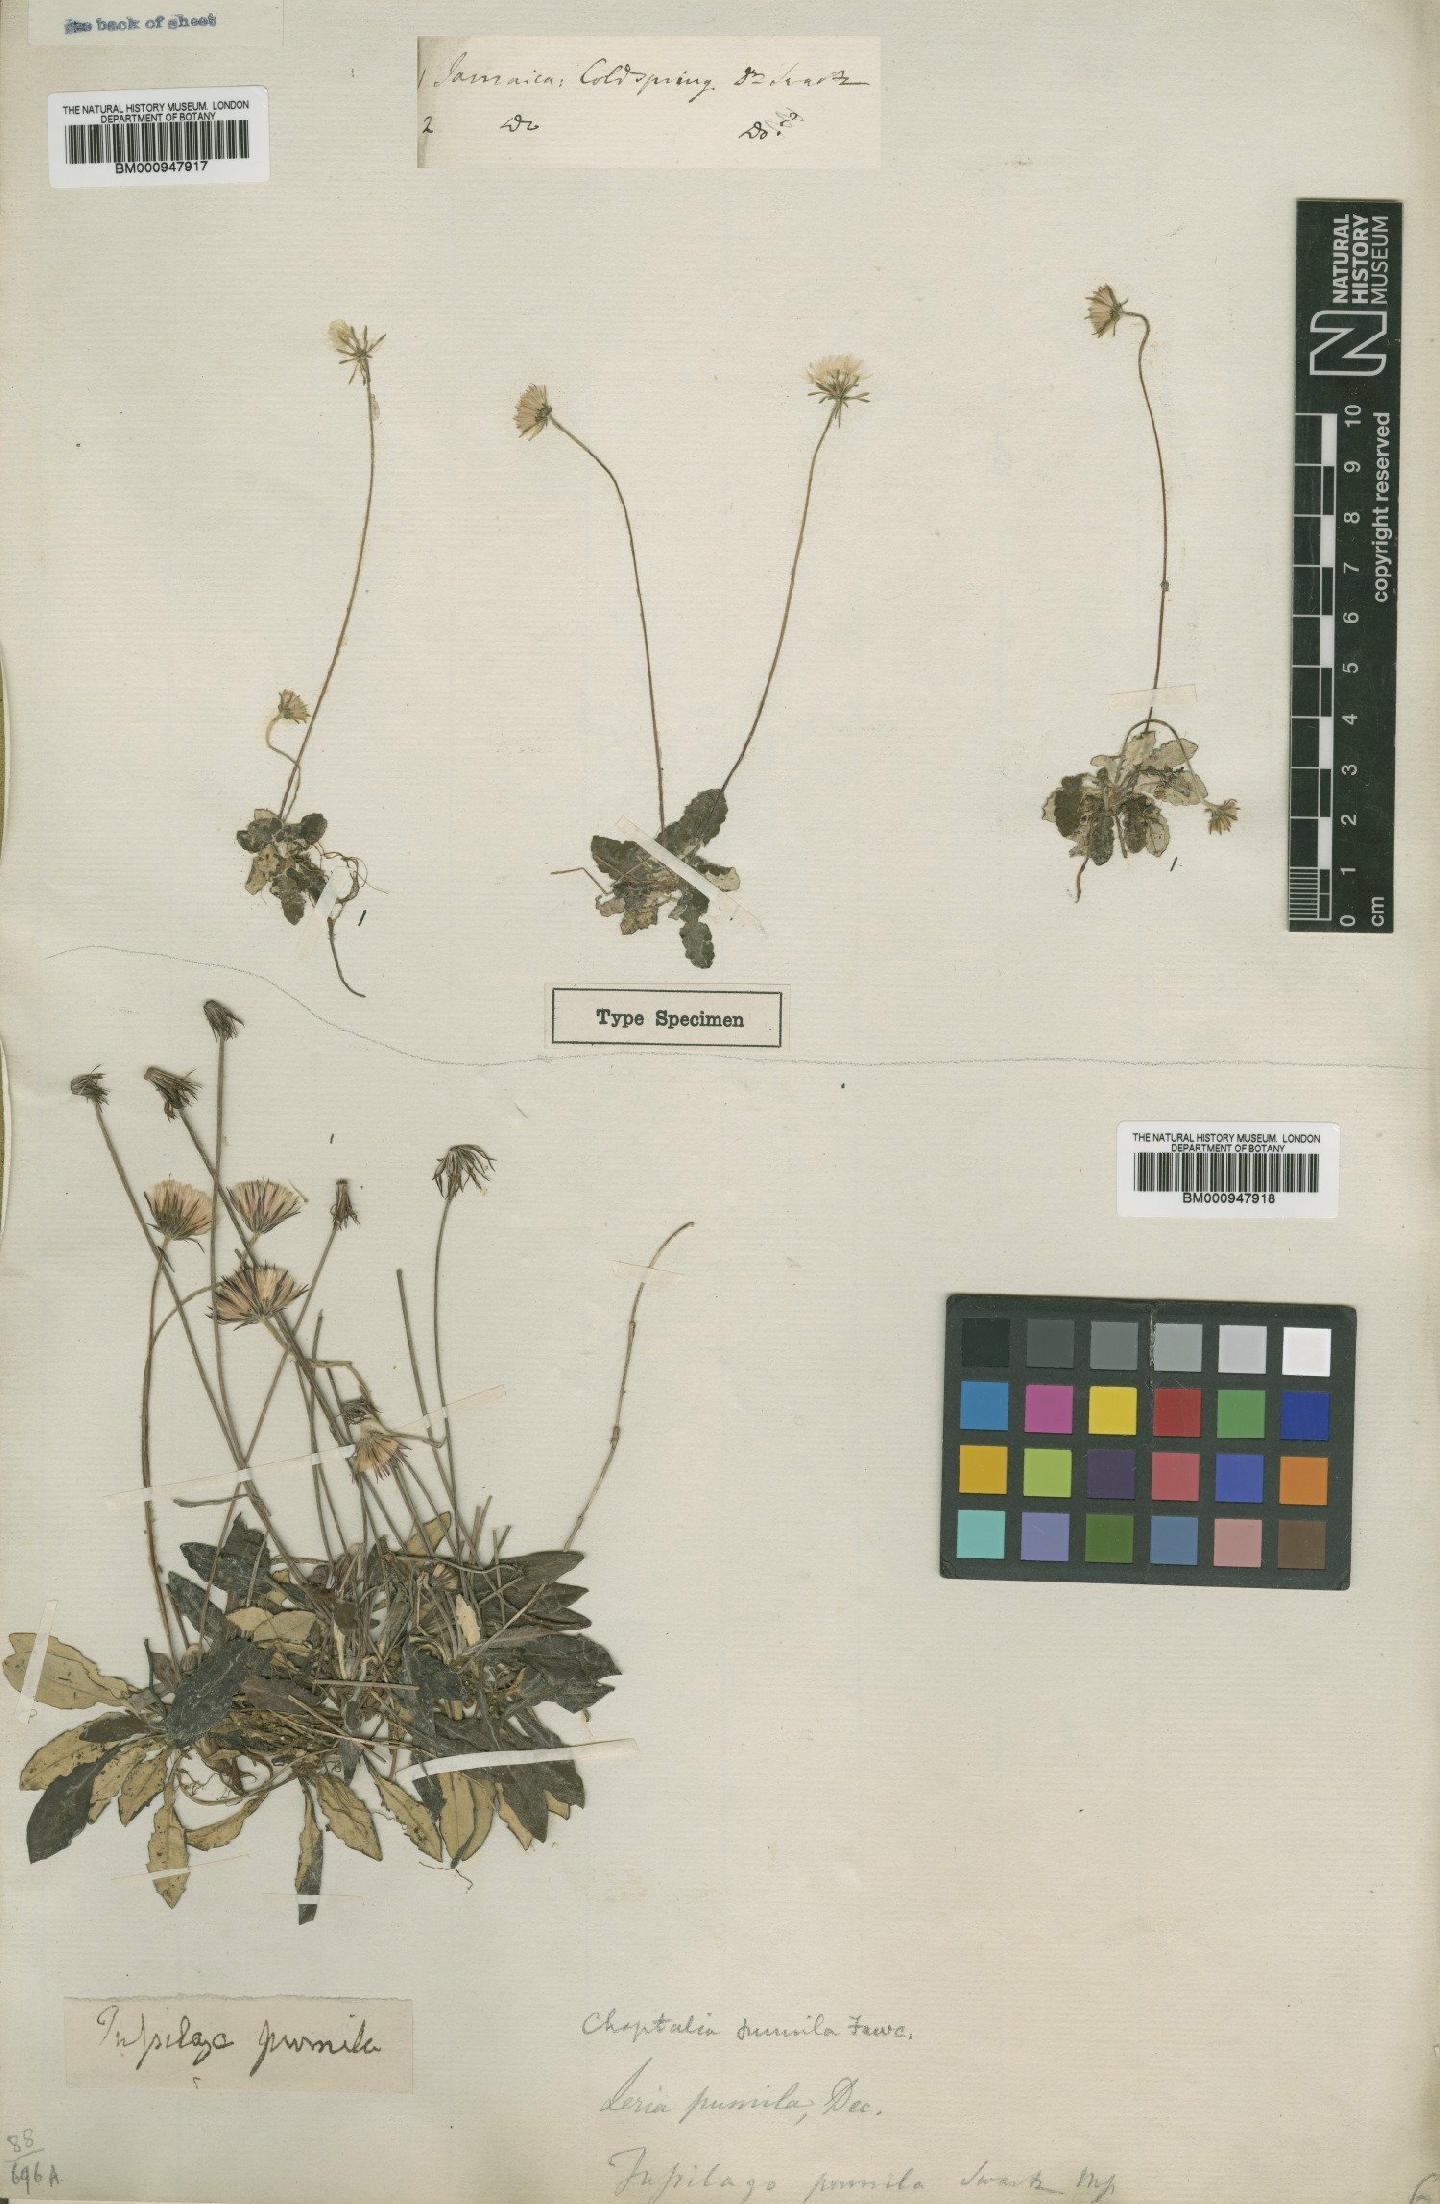 To NHMUK collection (Chaptalia pumila (Sw.) Urb.; Type; NHMUK:ecatalogue:619799)